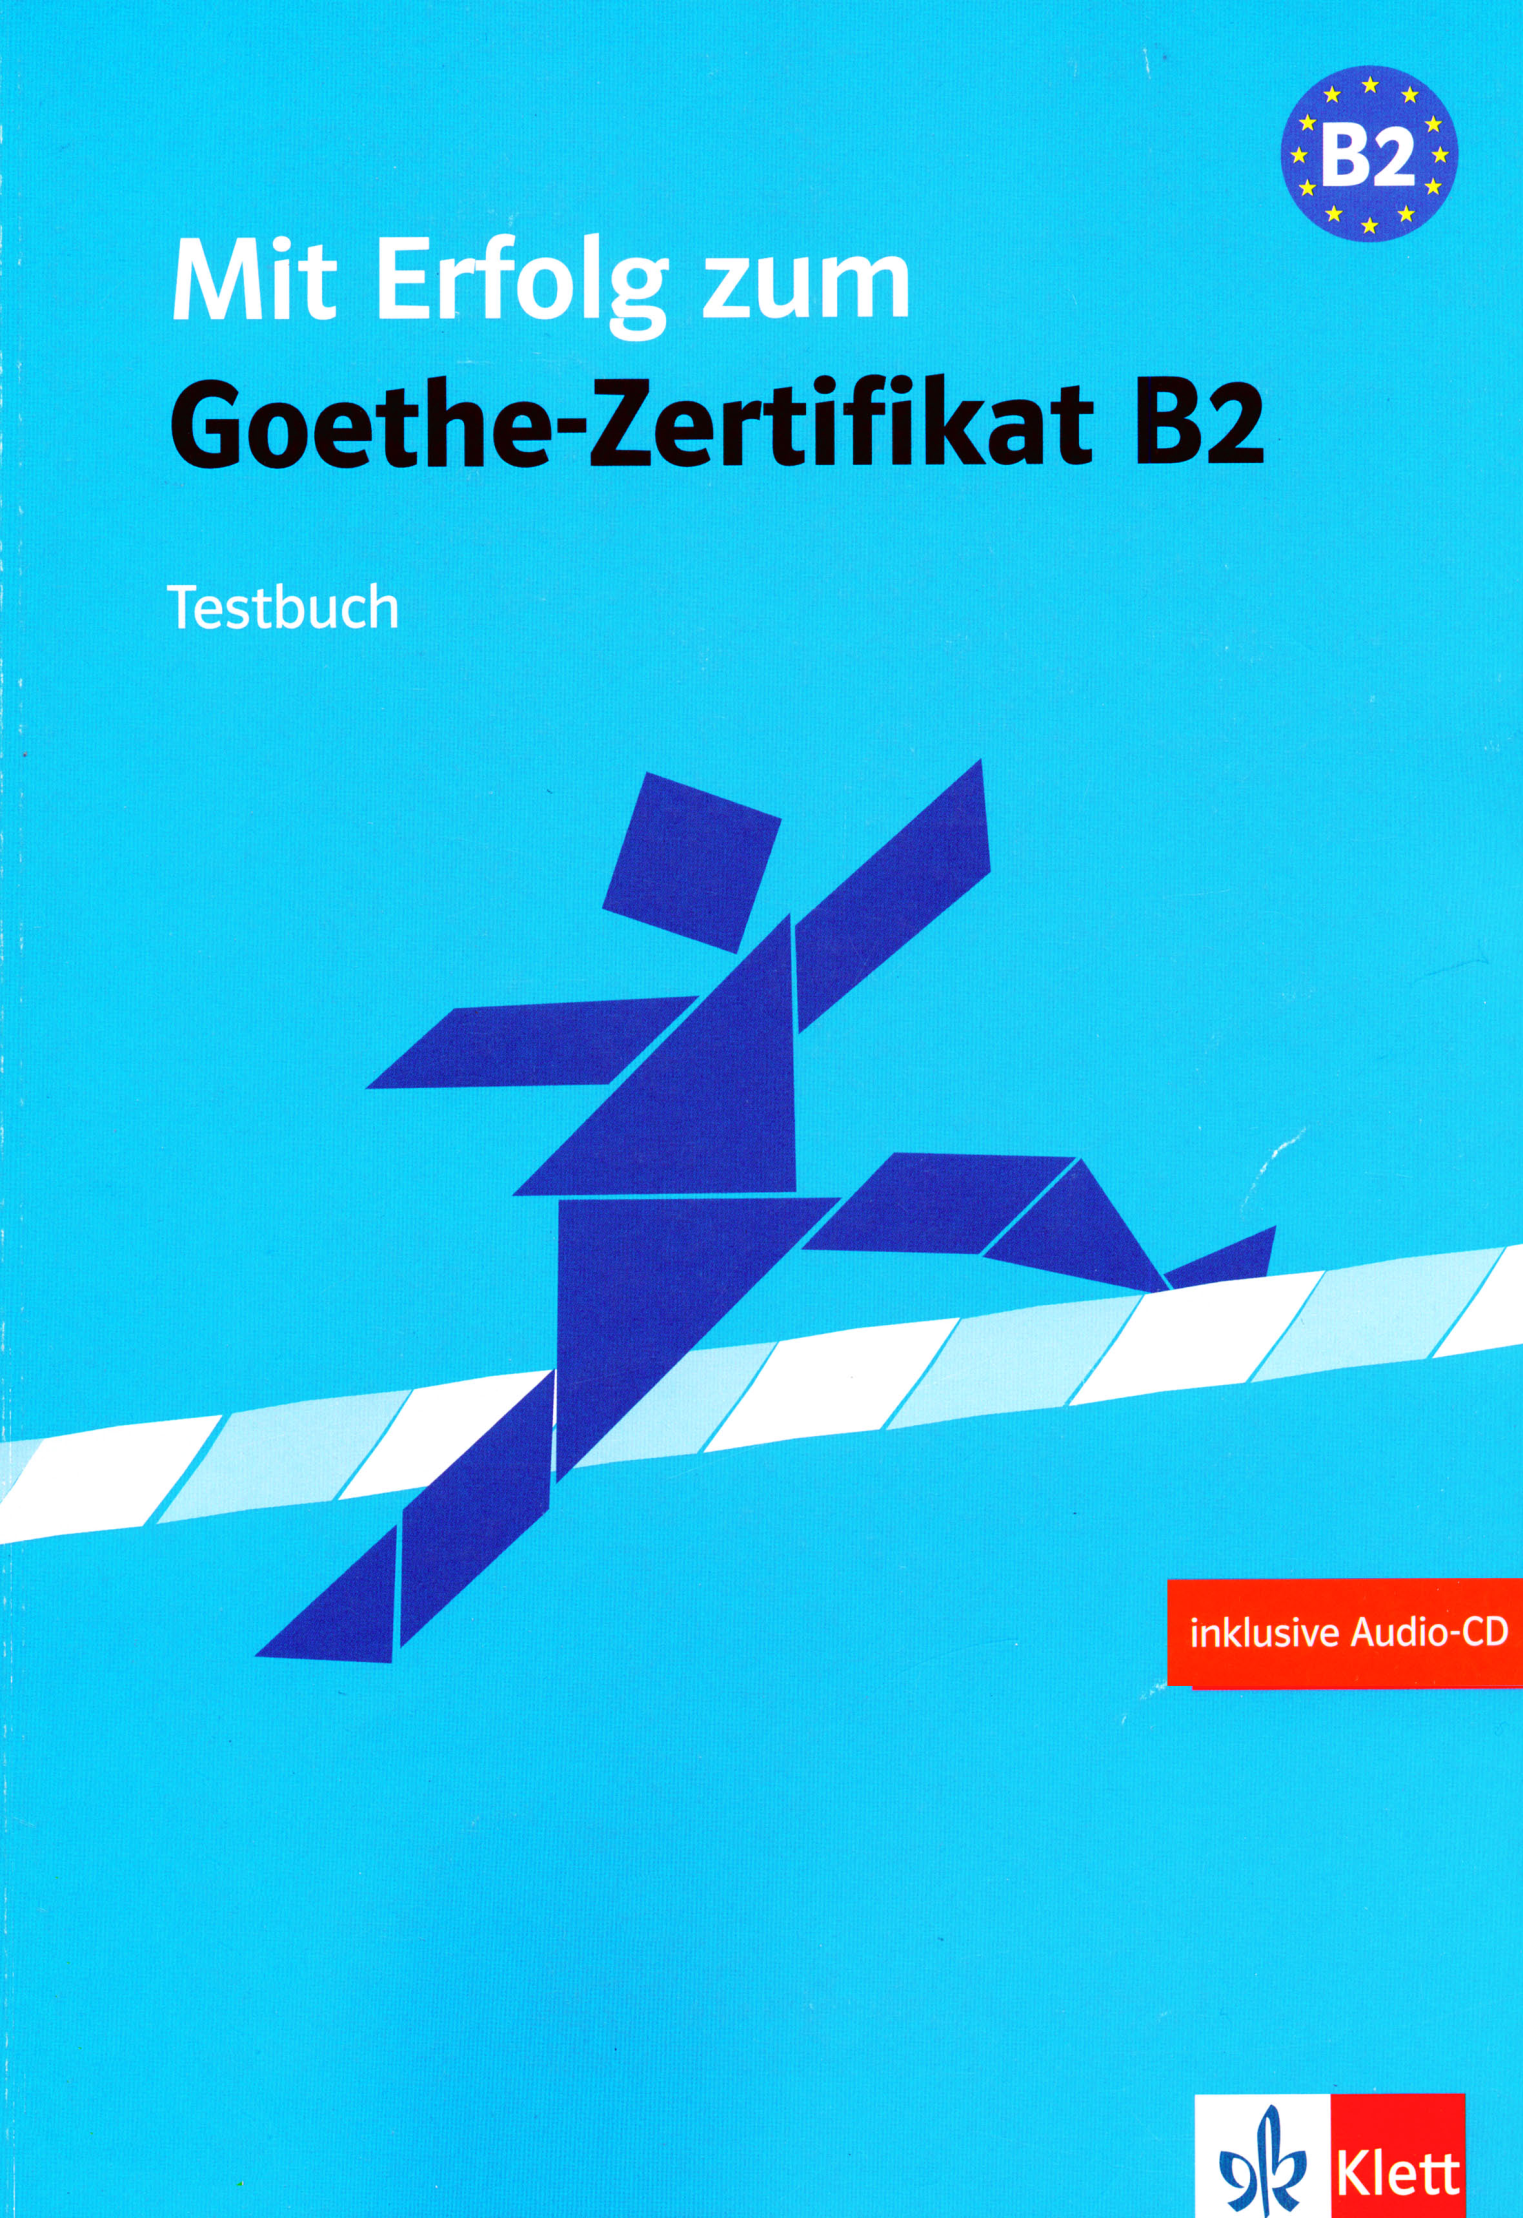 Rich Results on Google's SERP when searching for ''Mit-Erfolg-zum-Goethe-Zertifikat-B2-Testbuch''